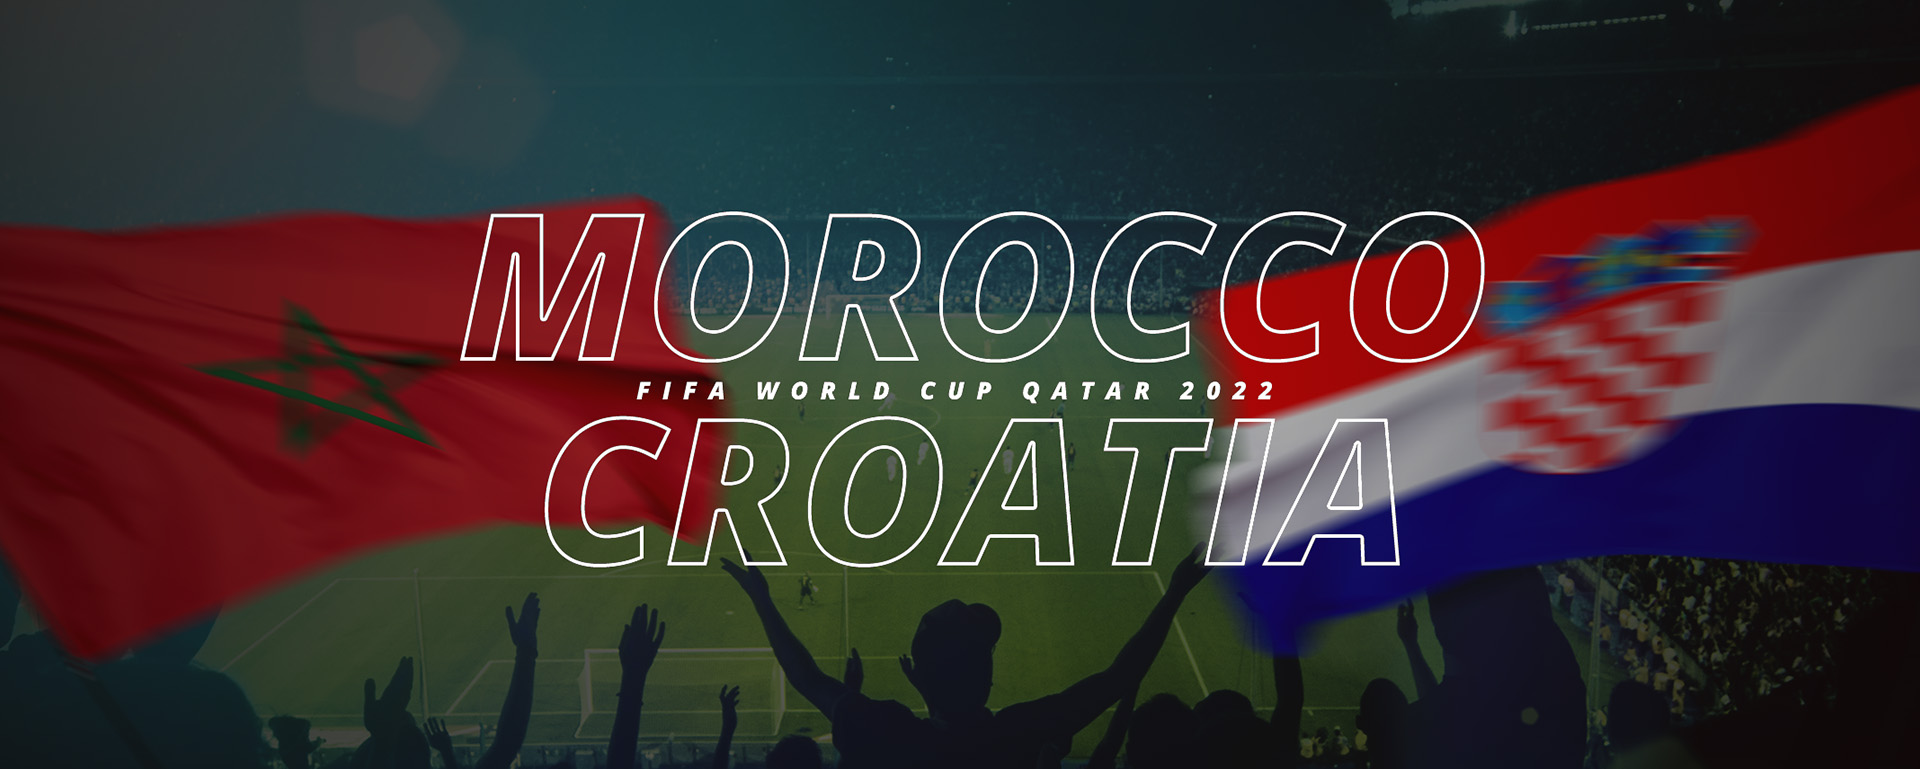 MOROCCO VS CROATIA | FIFA WORLD CUP QATAR 2022